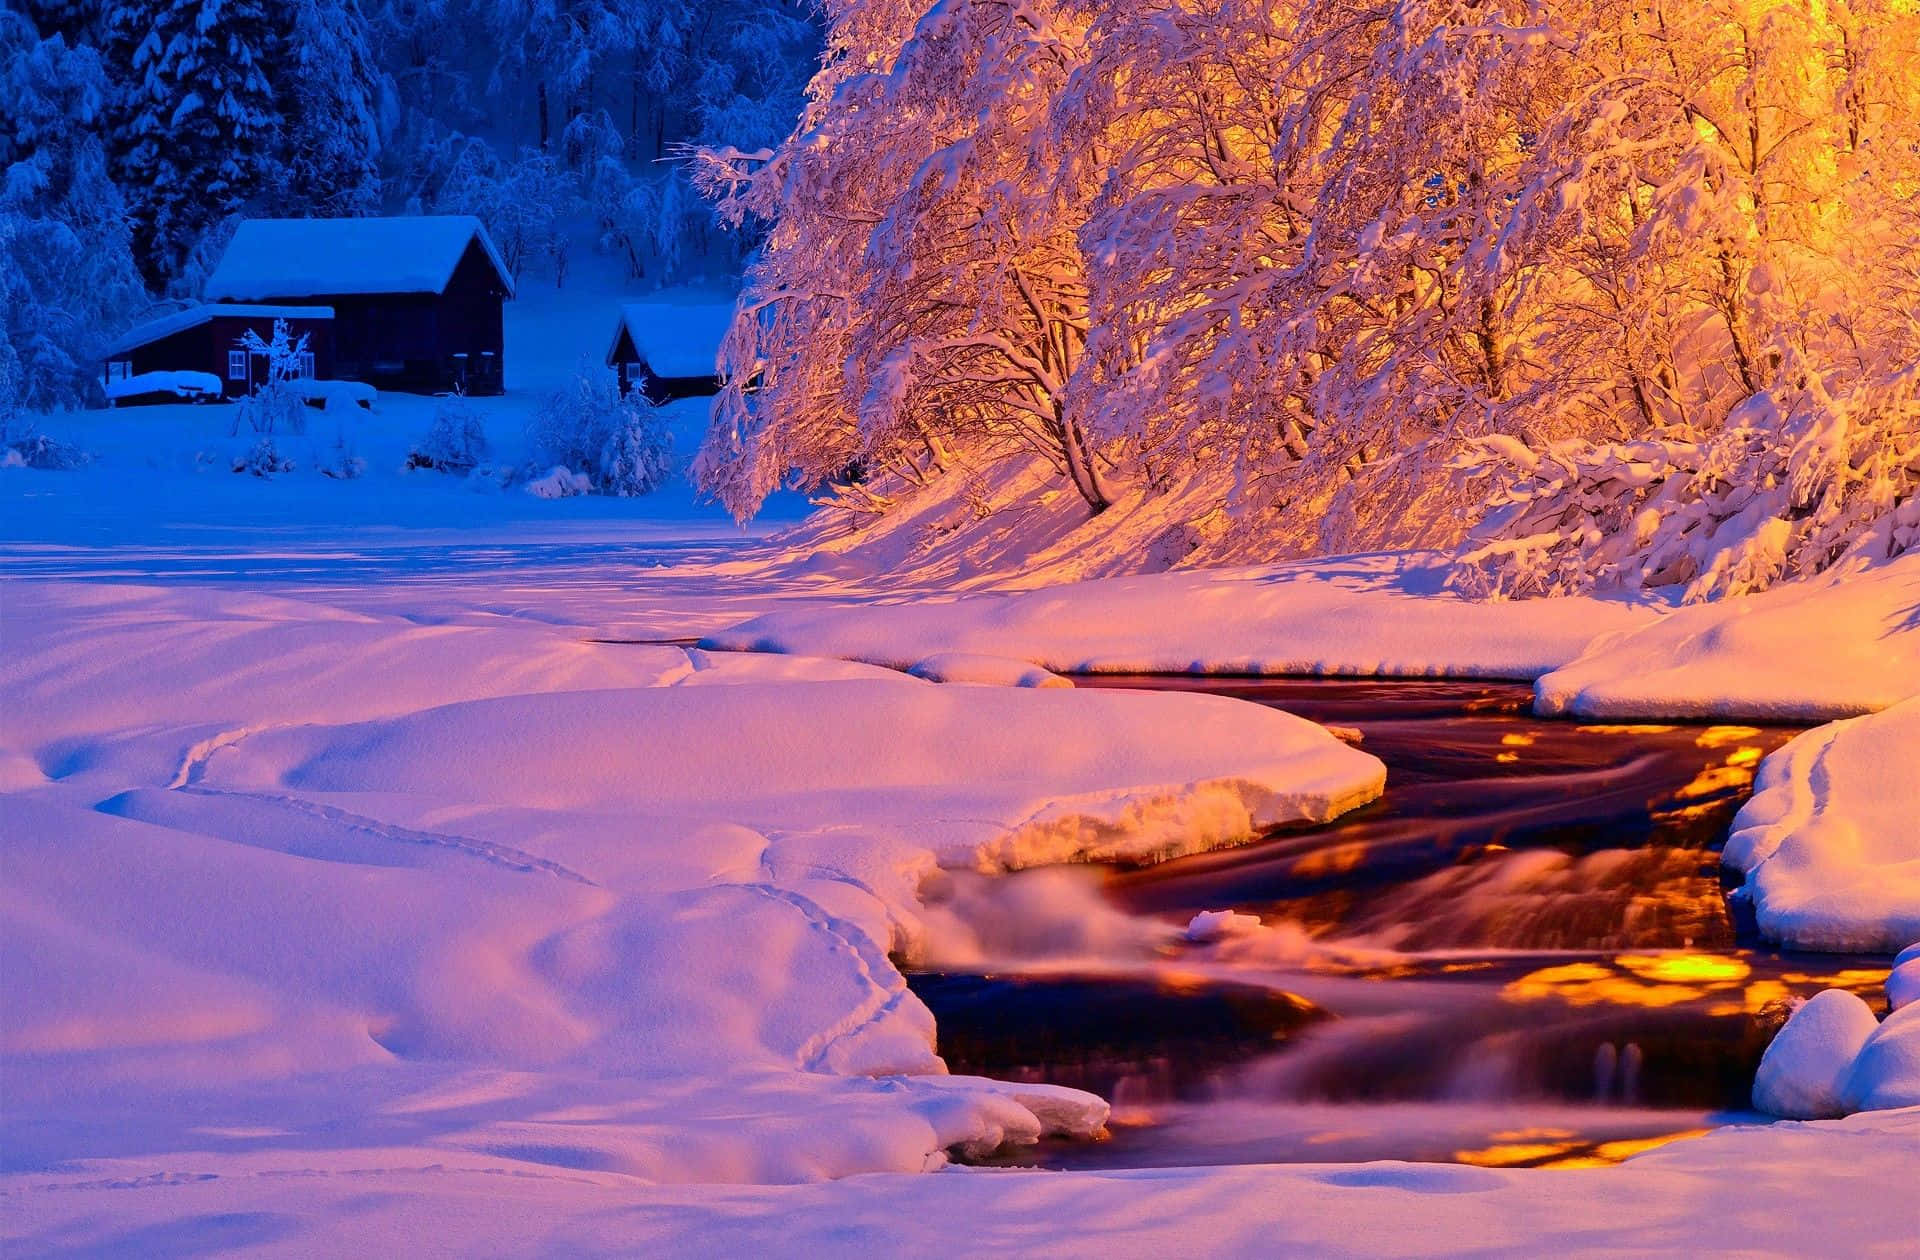 Stunning Winter Sunset over Snow-Covered Landscape Wallpaper